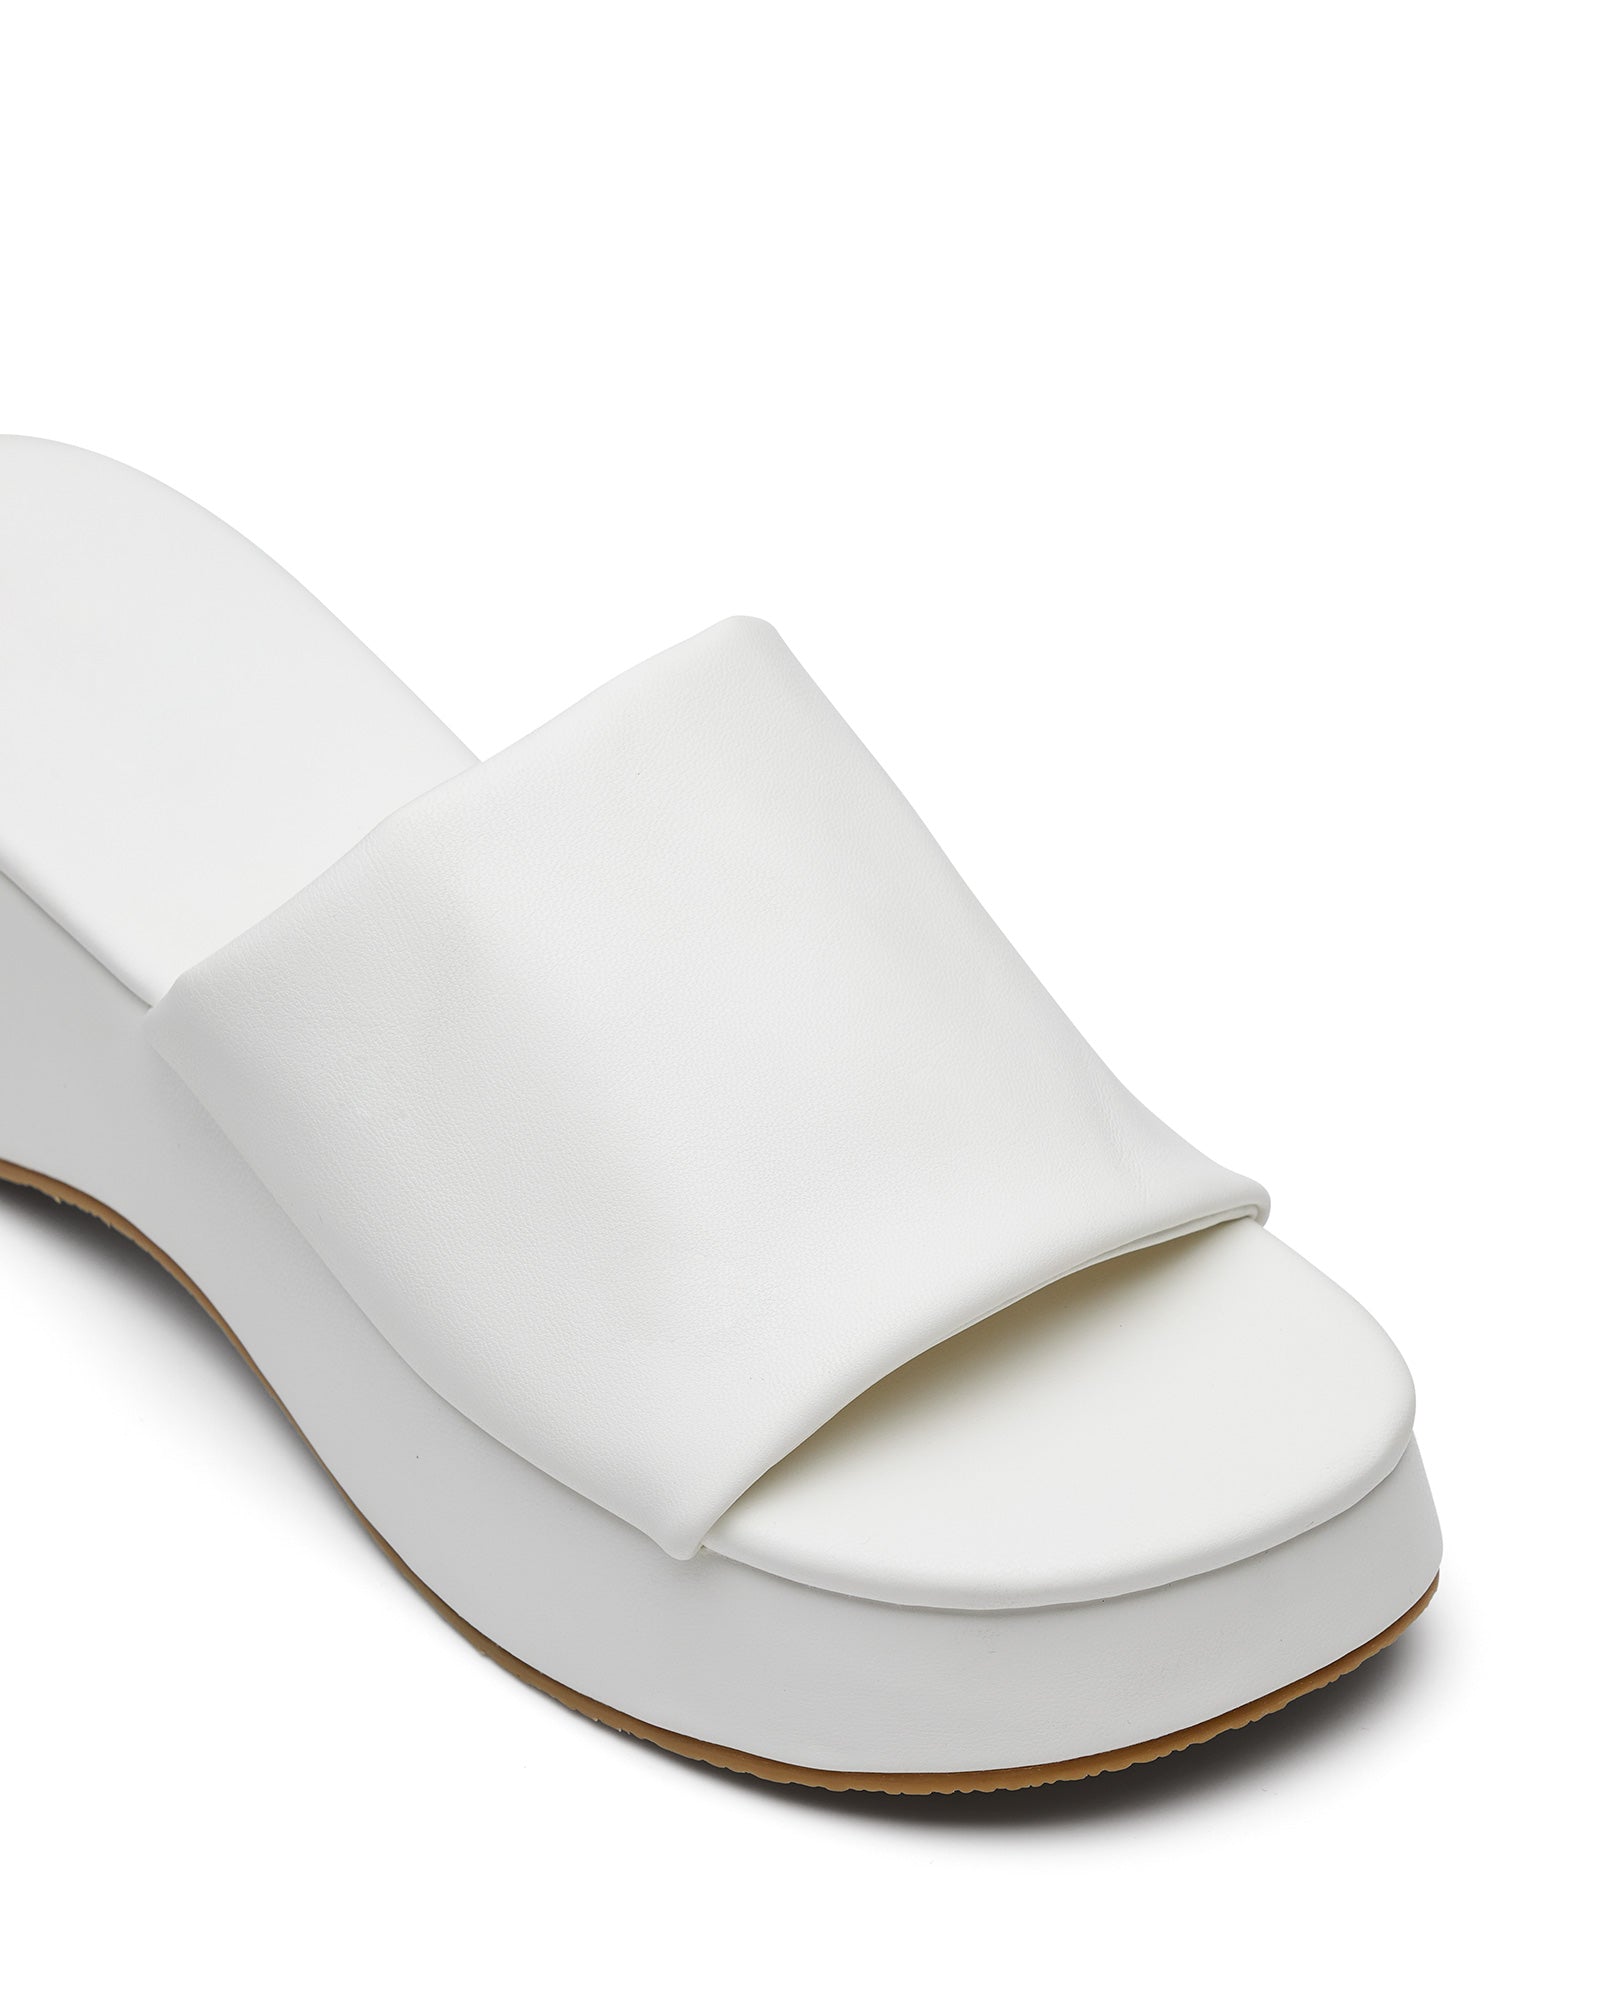 Therapy Shoes Cindy White | Women's Sandals | Slides | Platform | Mule